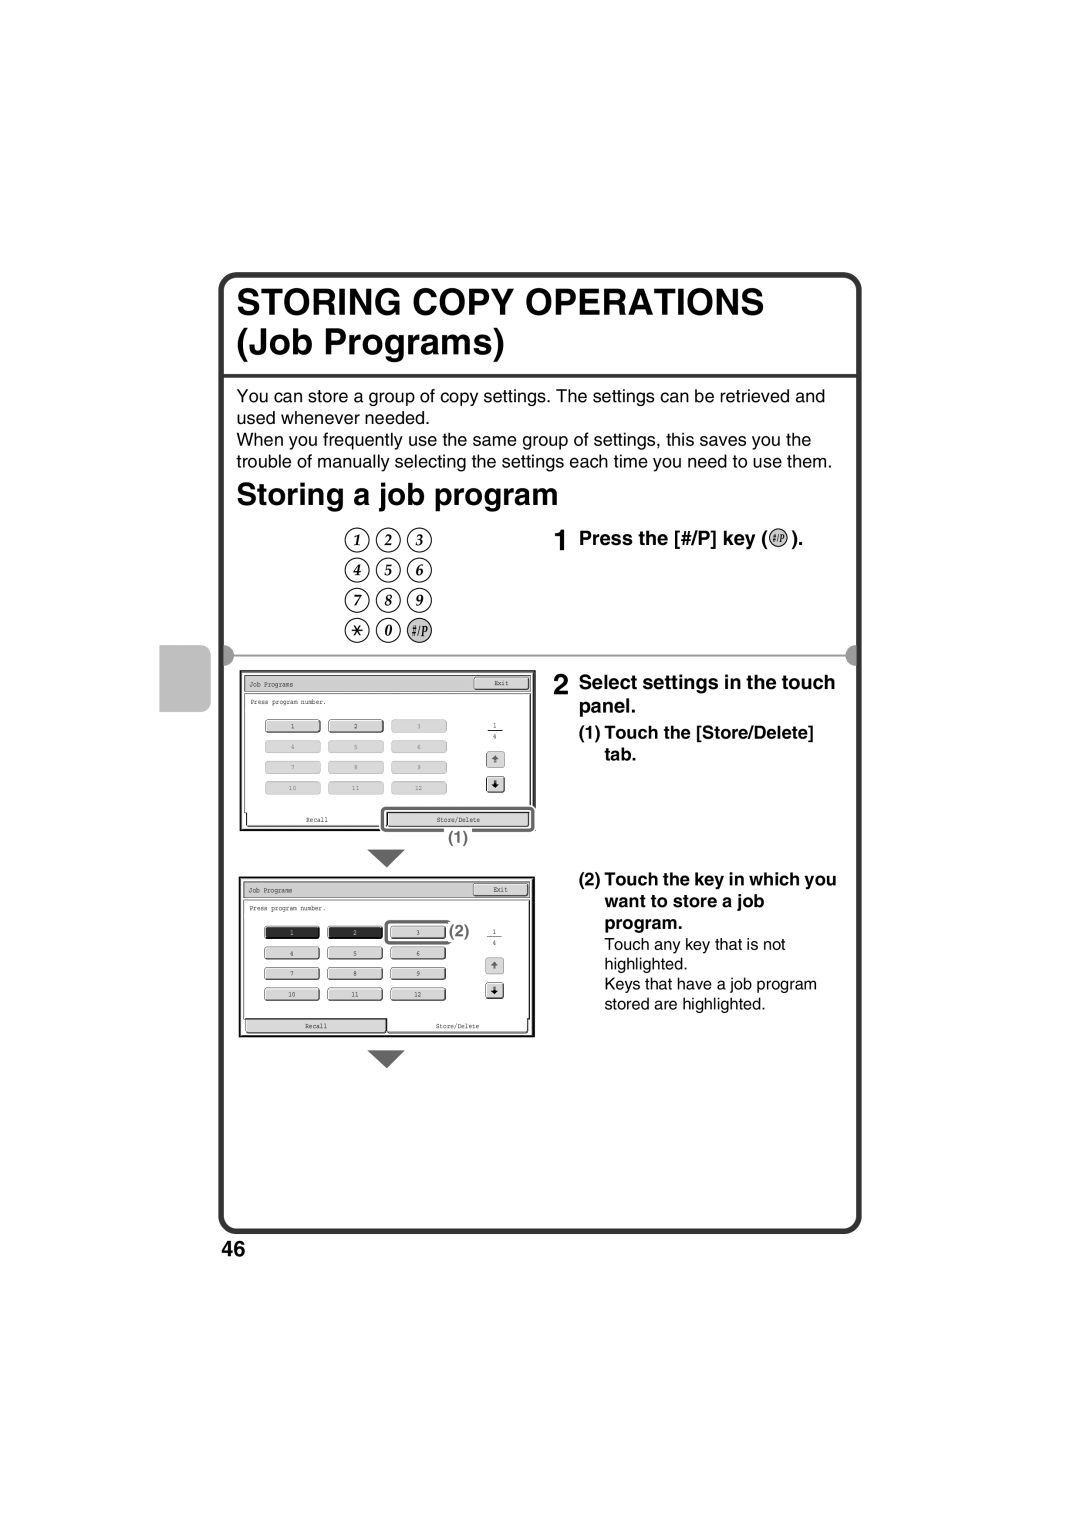 Sharp MX-B401 STORING COPY OPERATIONS Job Programs, Storing a job program, Press the #/P key, Touch the Store/Delete tab 